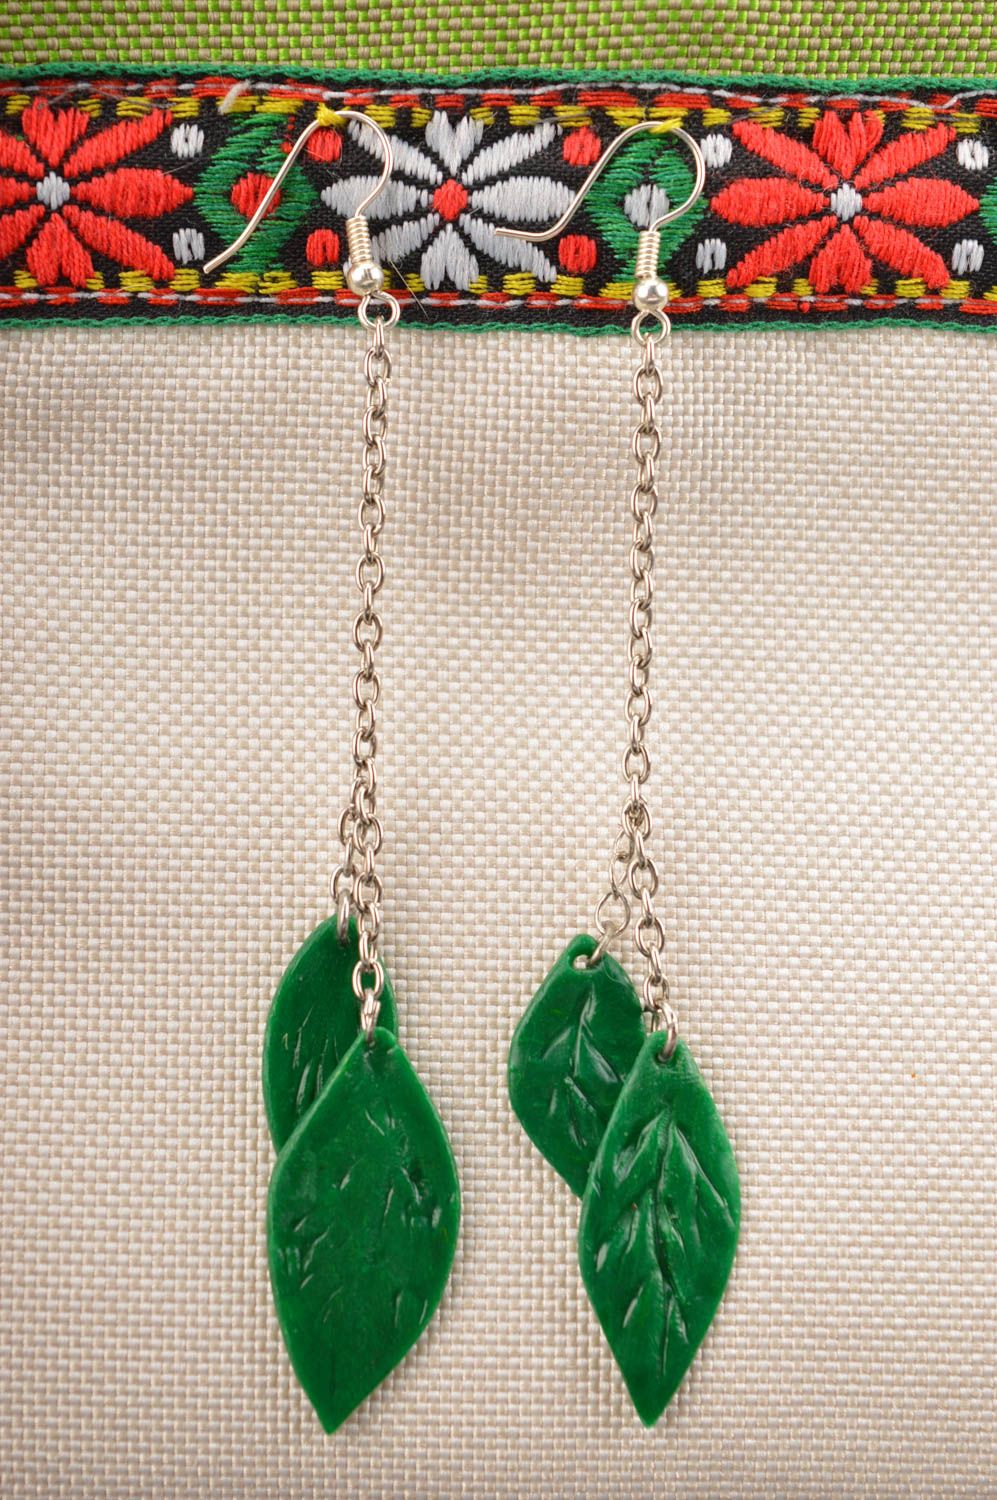 Stylish handmade plastic earrings modern jewelry designs beautiful jewellery photo 1